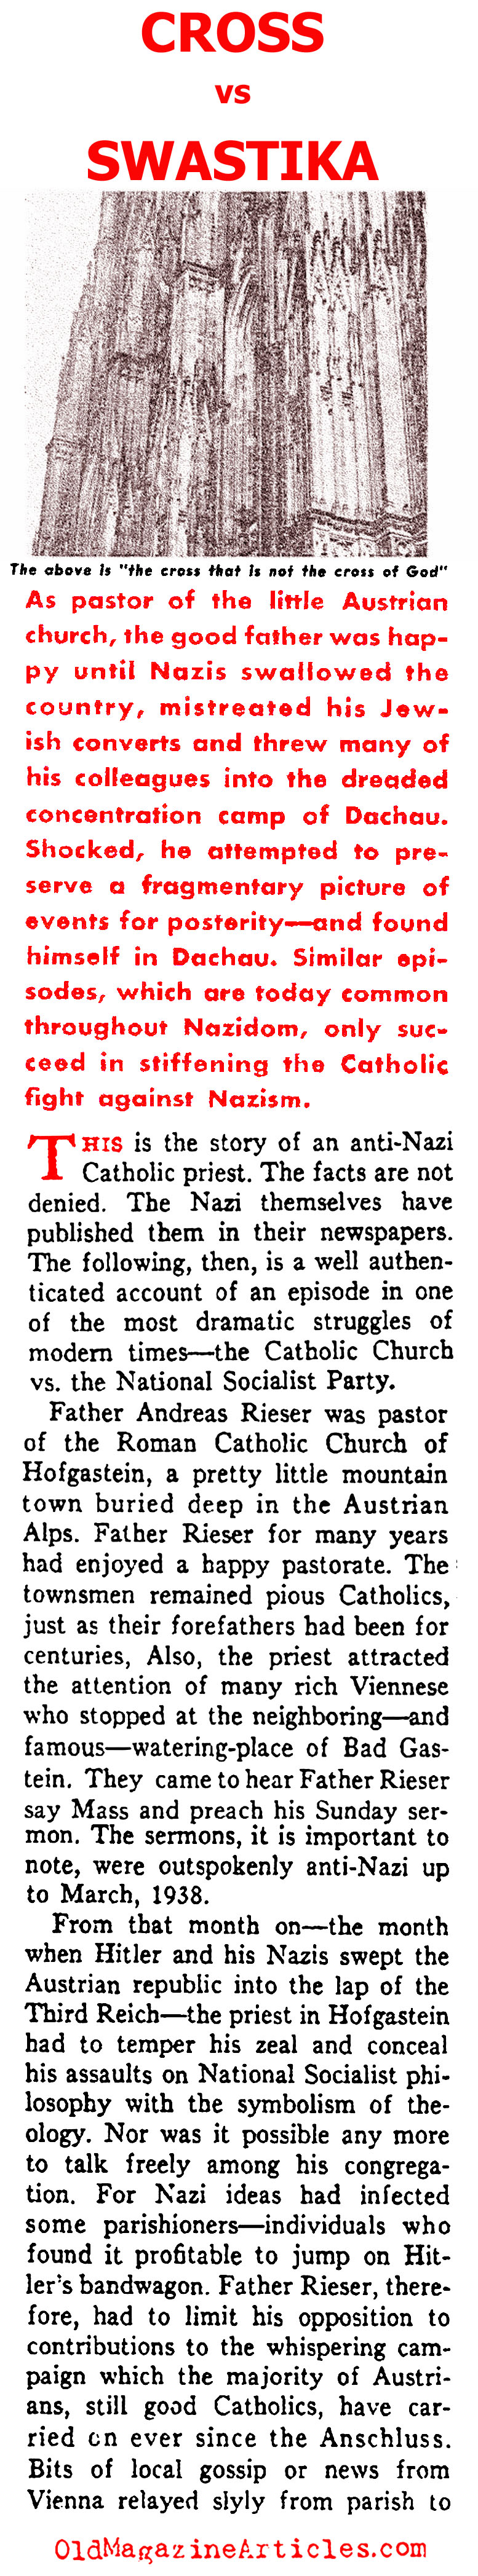 Nazis Against the Christian Churches (Ken Magazine, 1939)